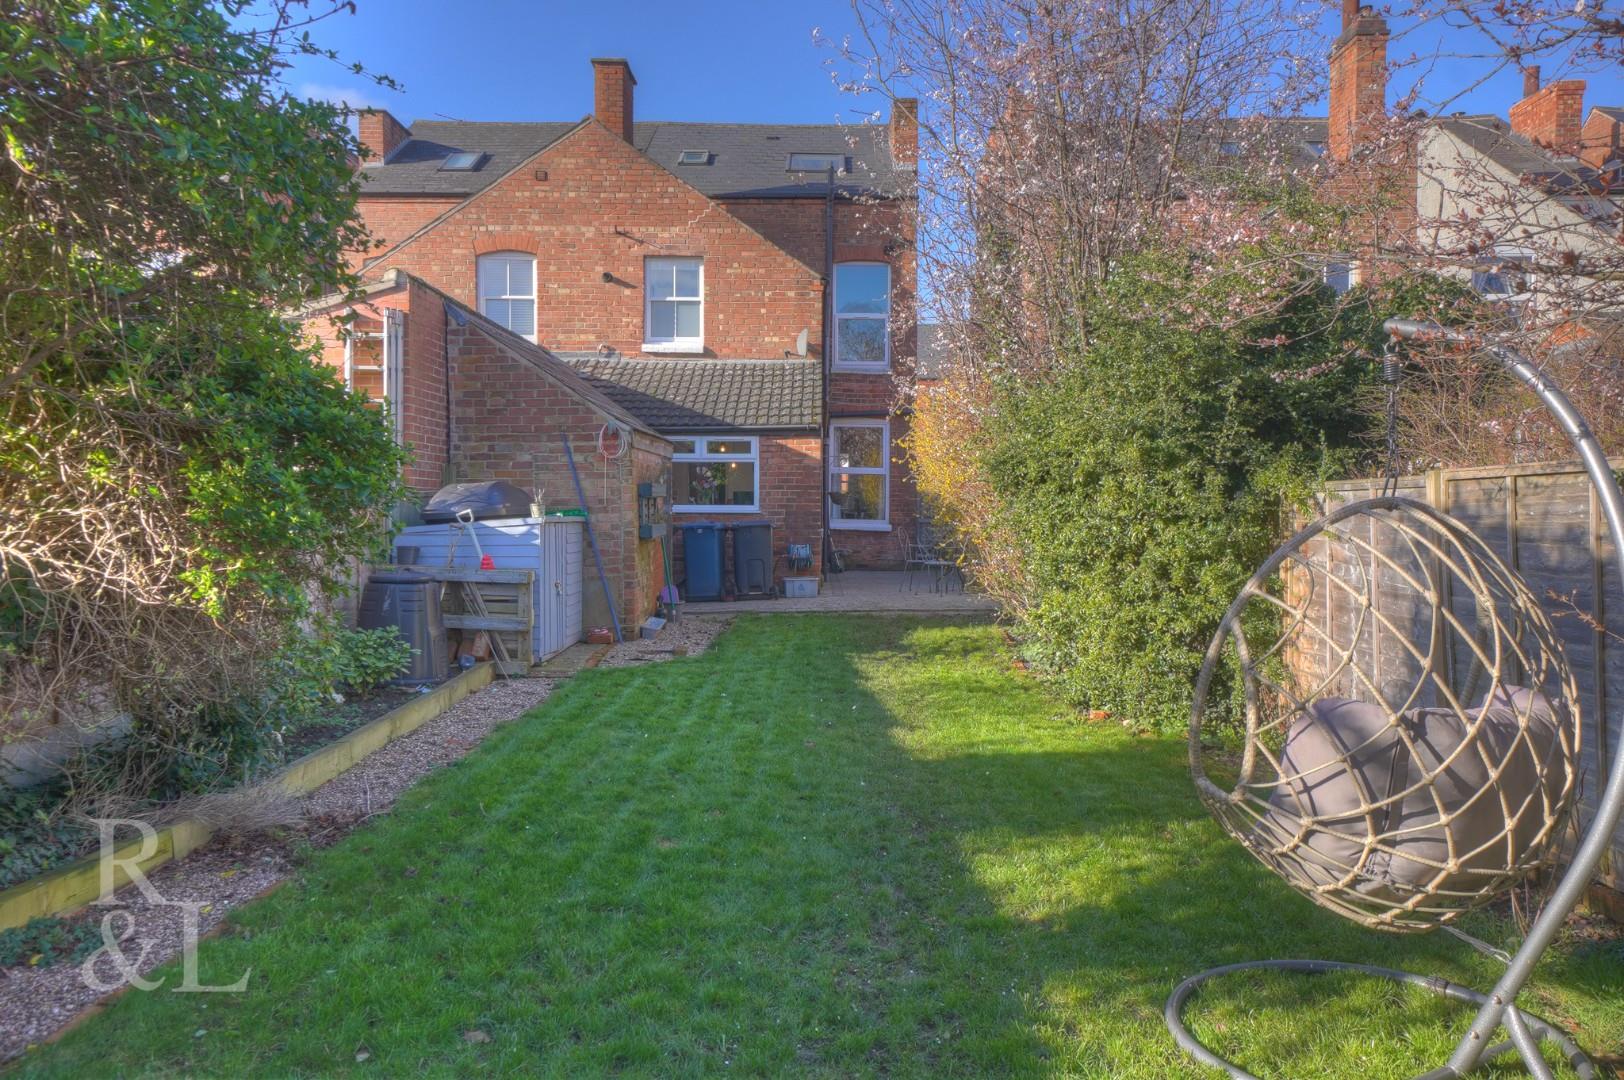 Property image for Highfield Road, West Bridgford, Nottingham